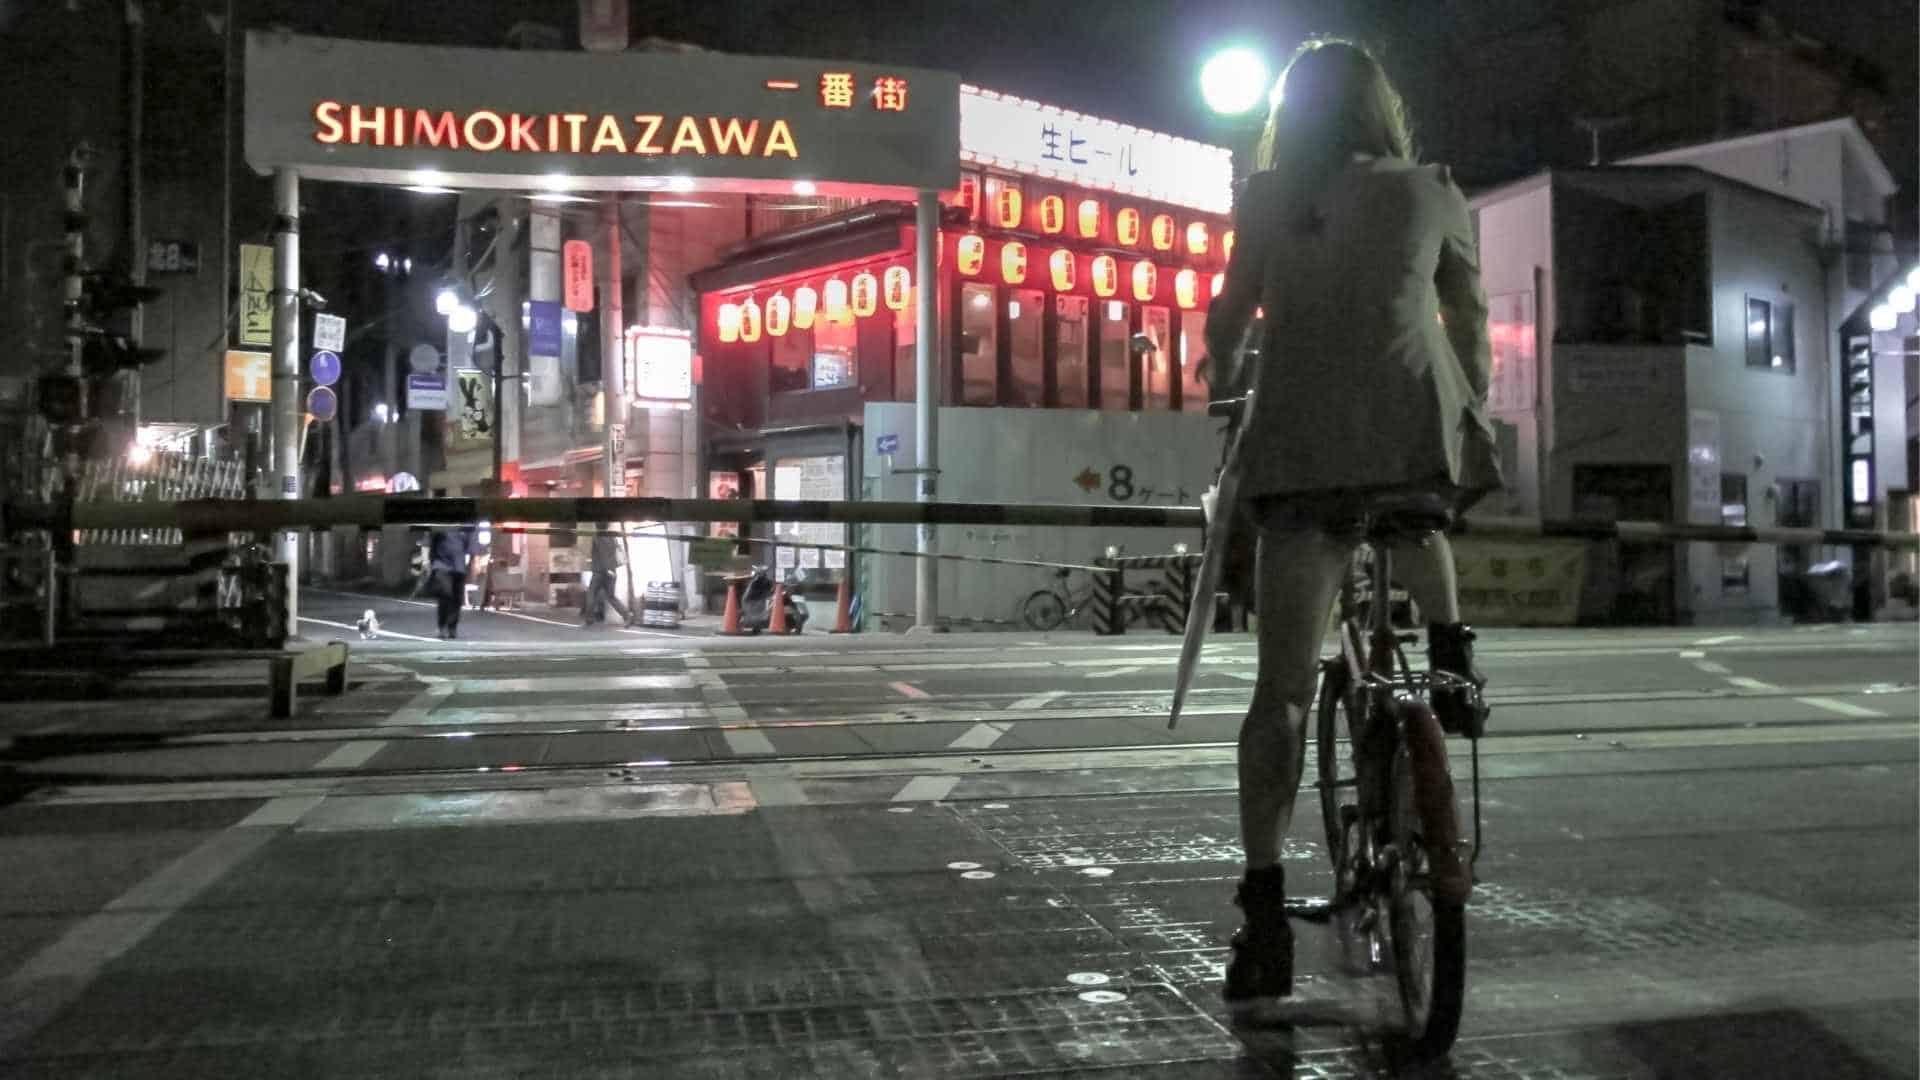 Top 5 unique & underground bars to drink in Shimokitazawa